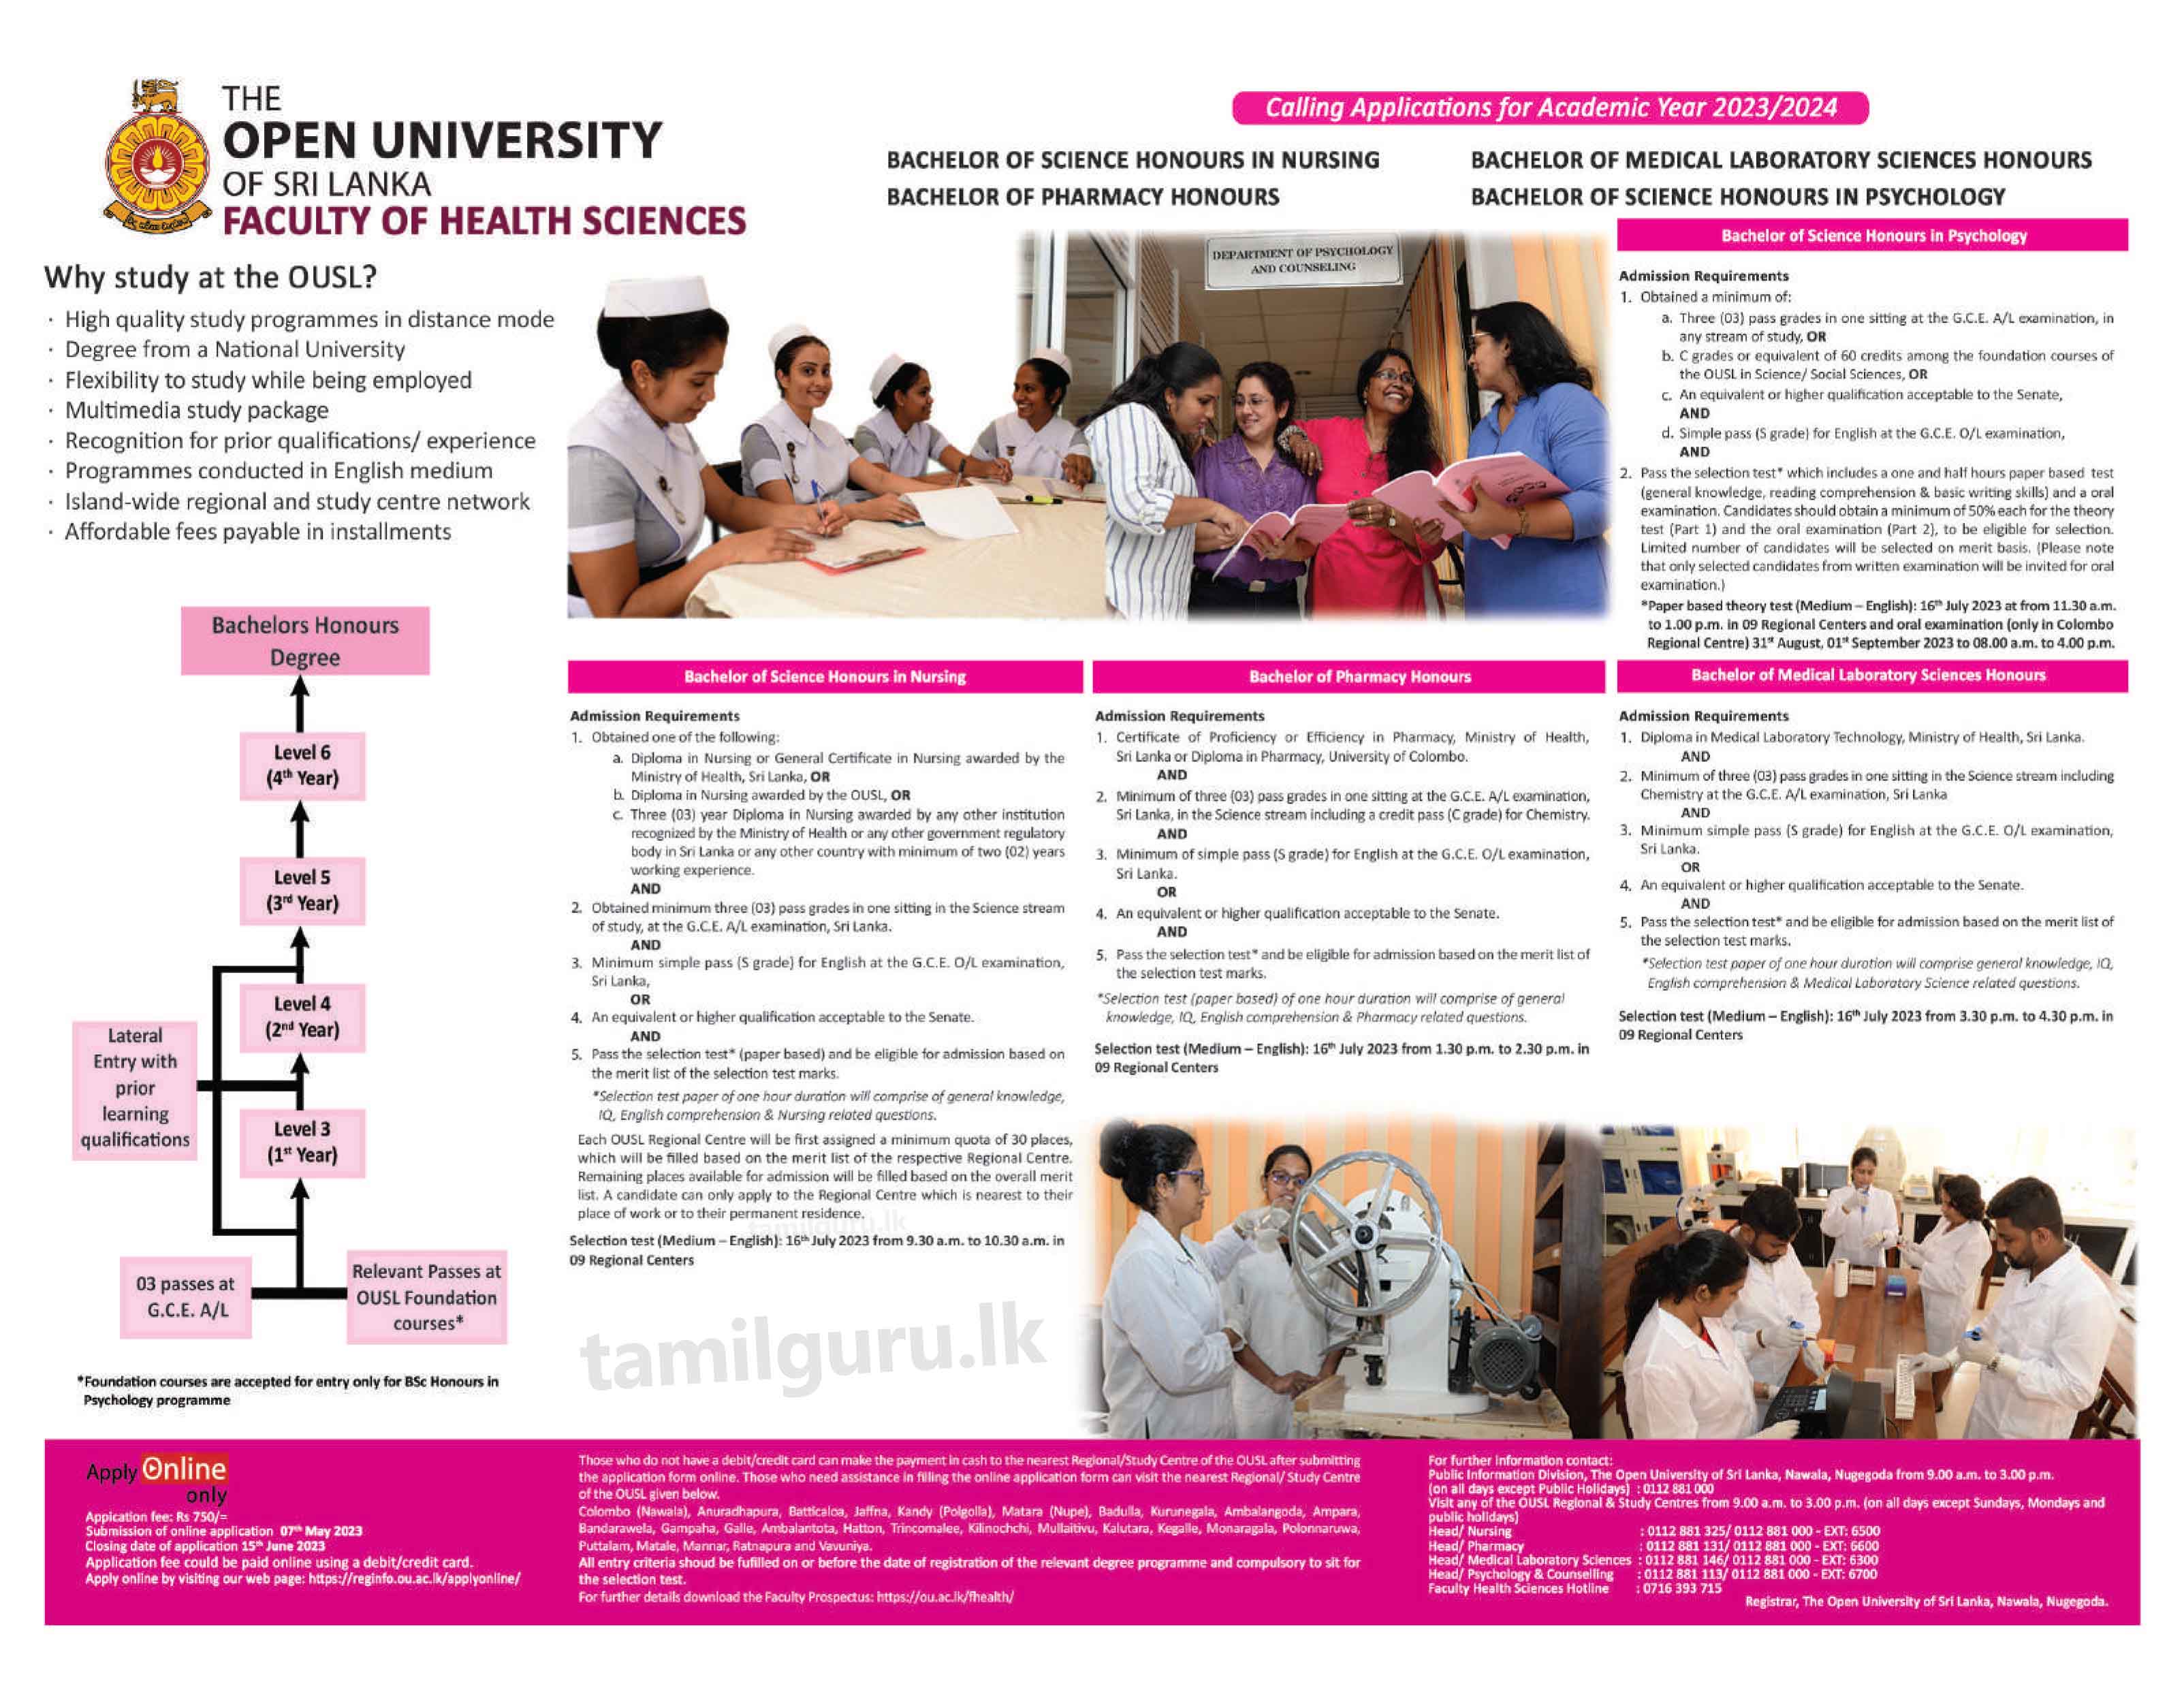 Open University Degree Programes Application 2023 (Nursing, Pharmacy, MLS, Psychology)
